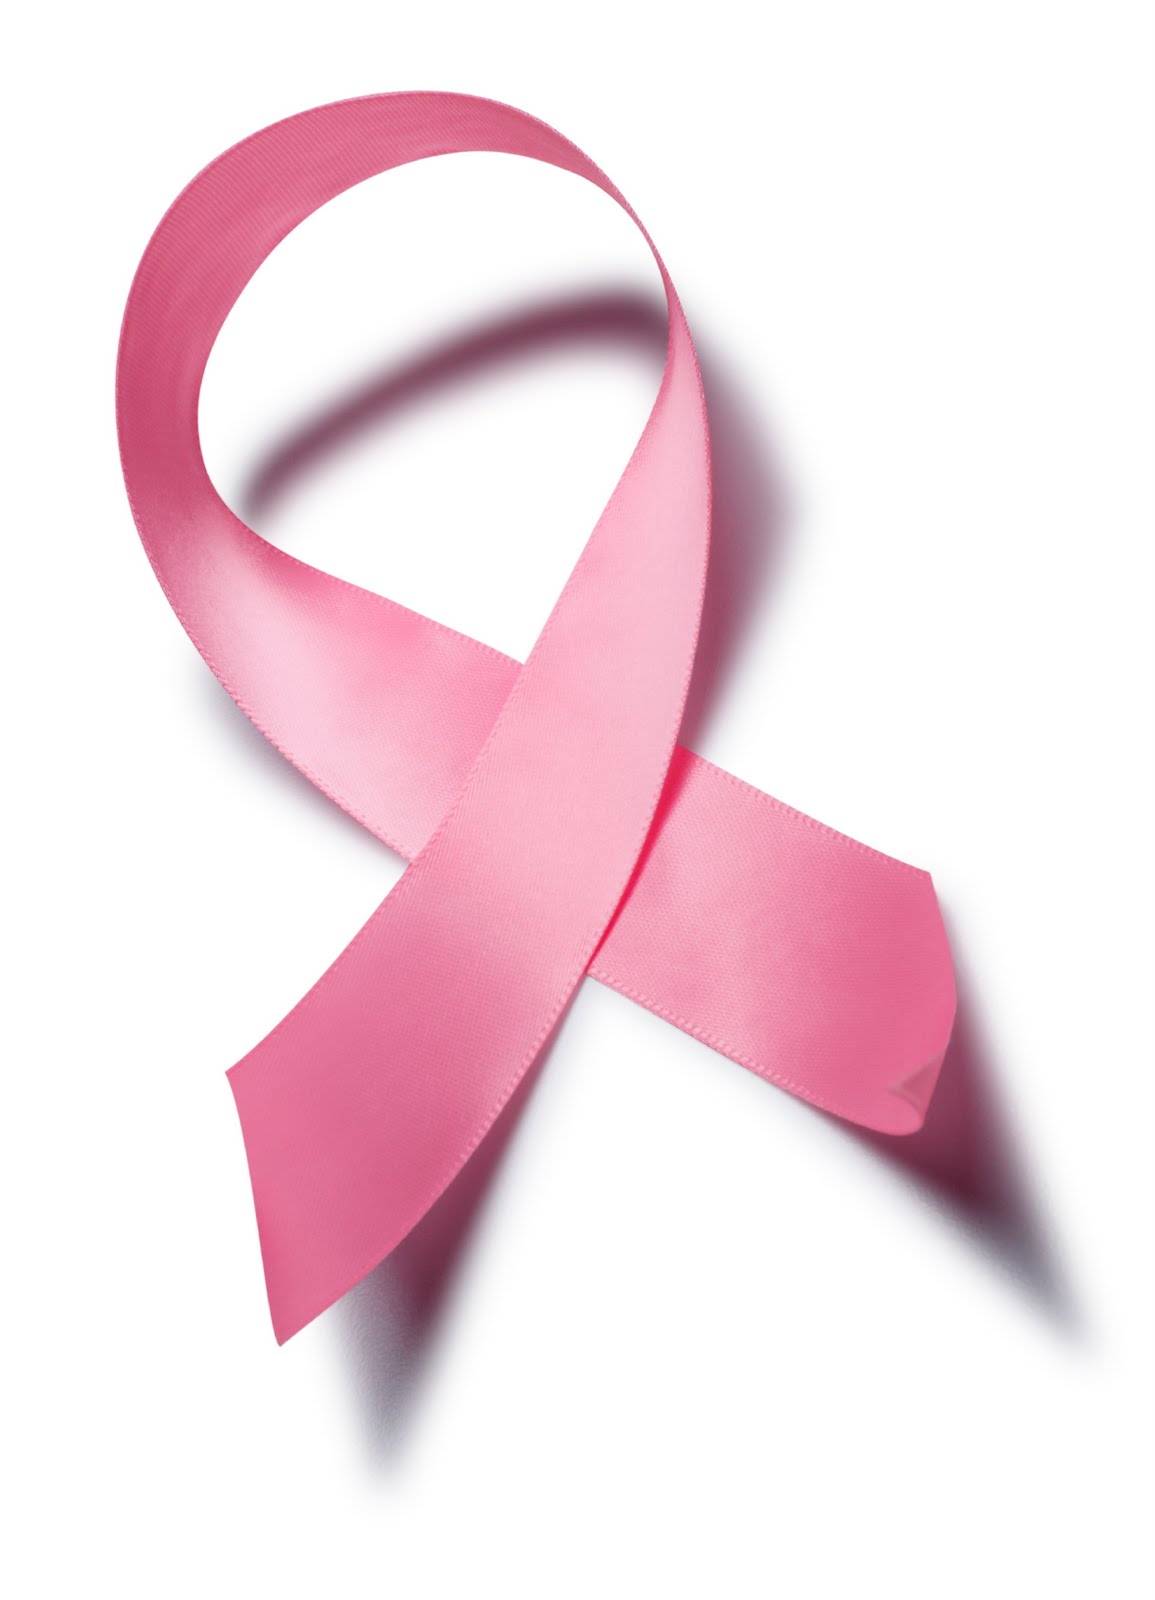 sara in italy: skip the mammogram and self exams?